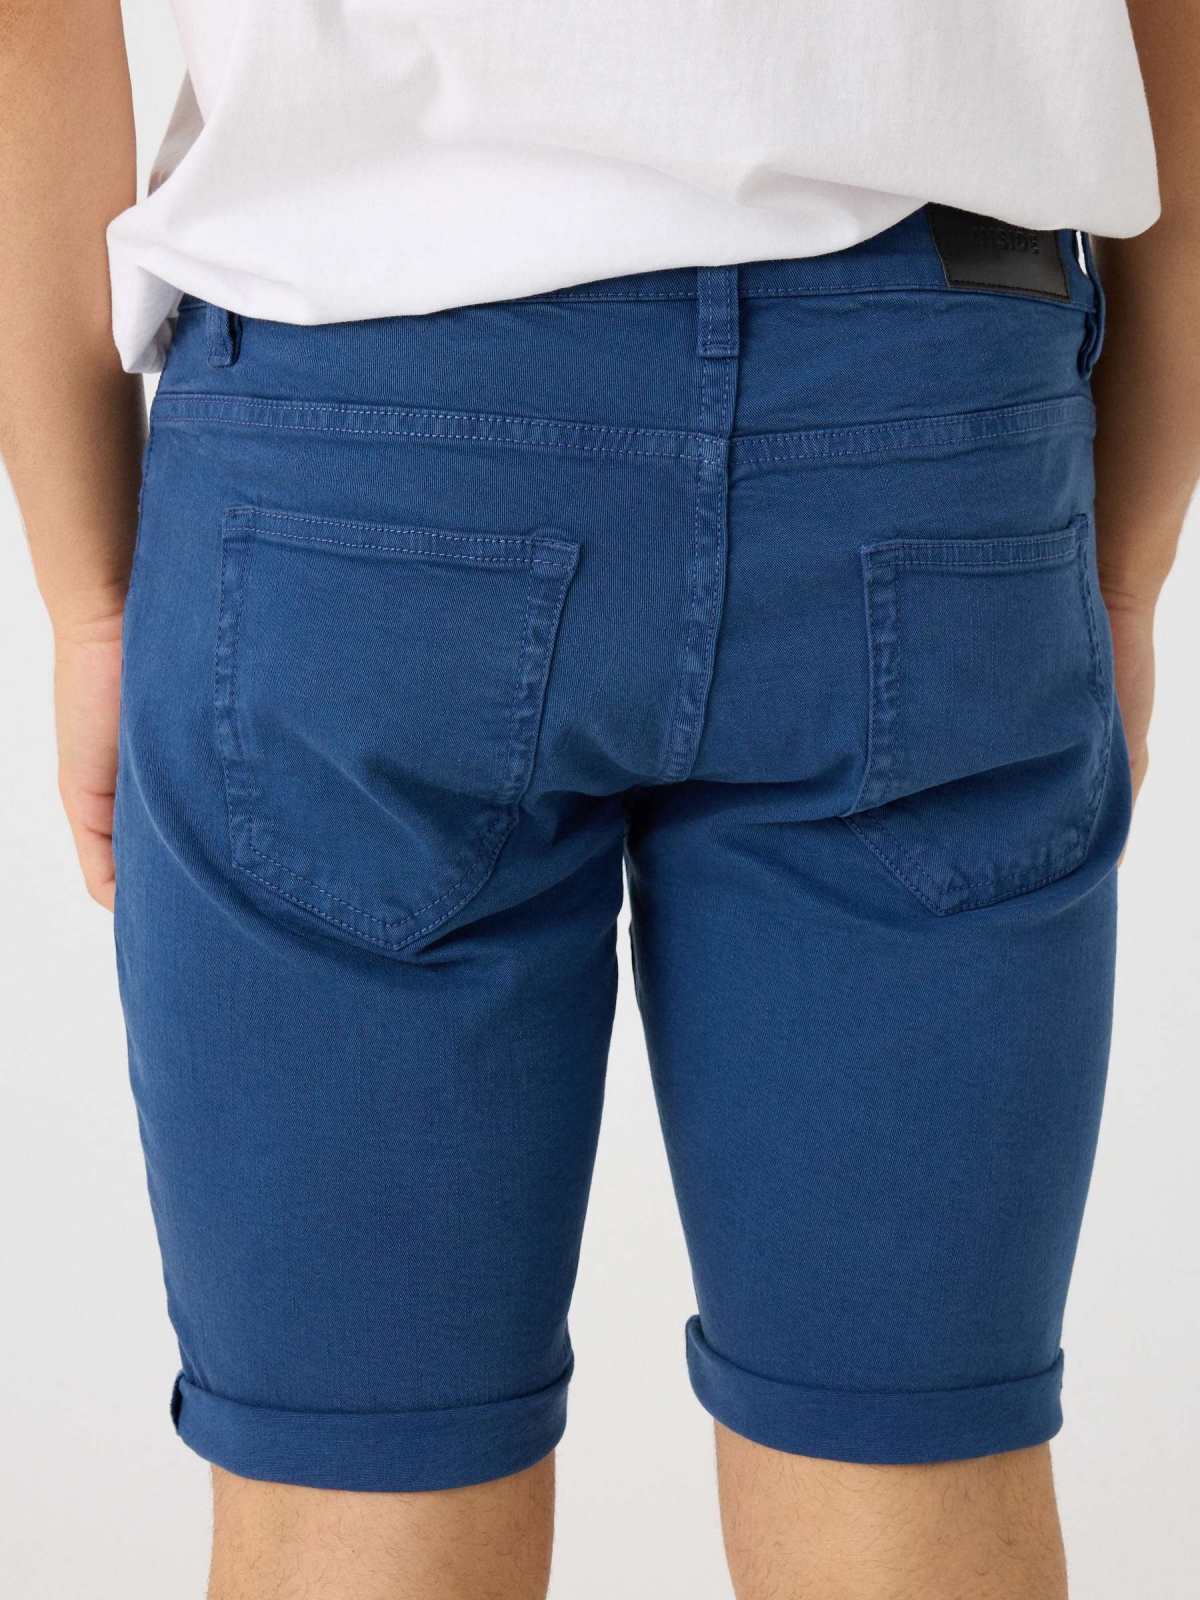 Coloured denim shorts indigo detail view